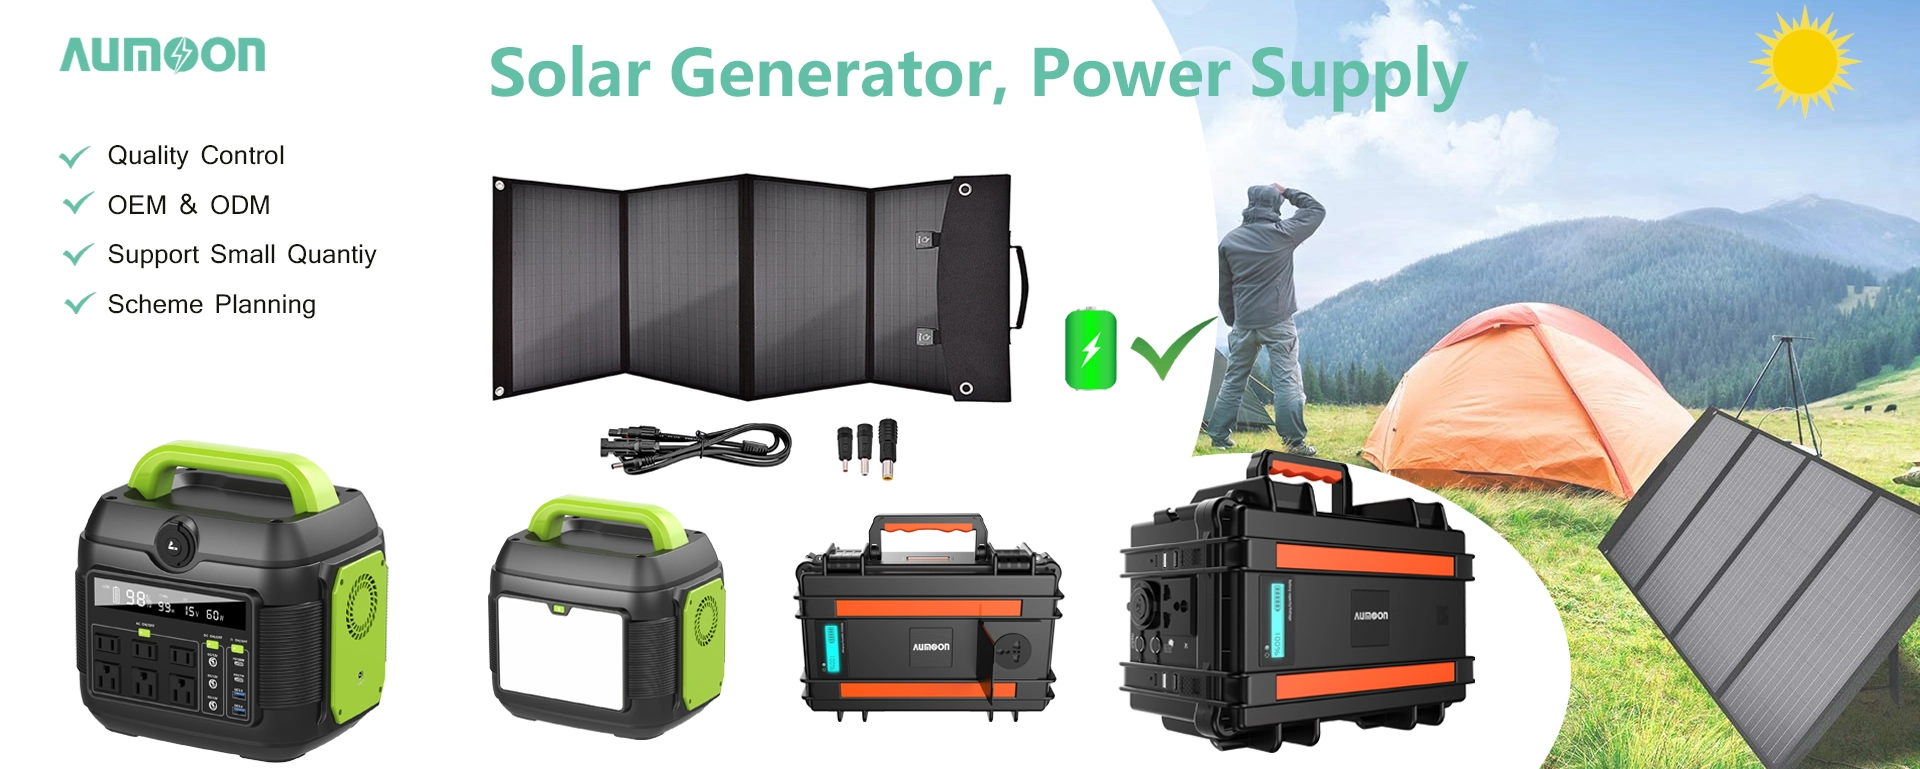 Why Choose Aumoon Solar Generator?----From USA Customer